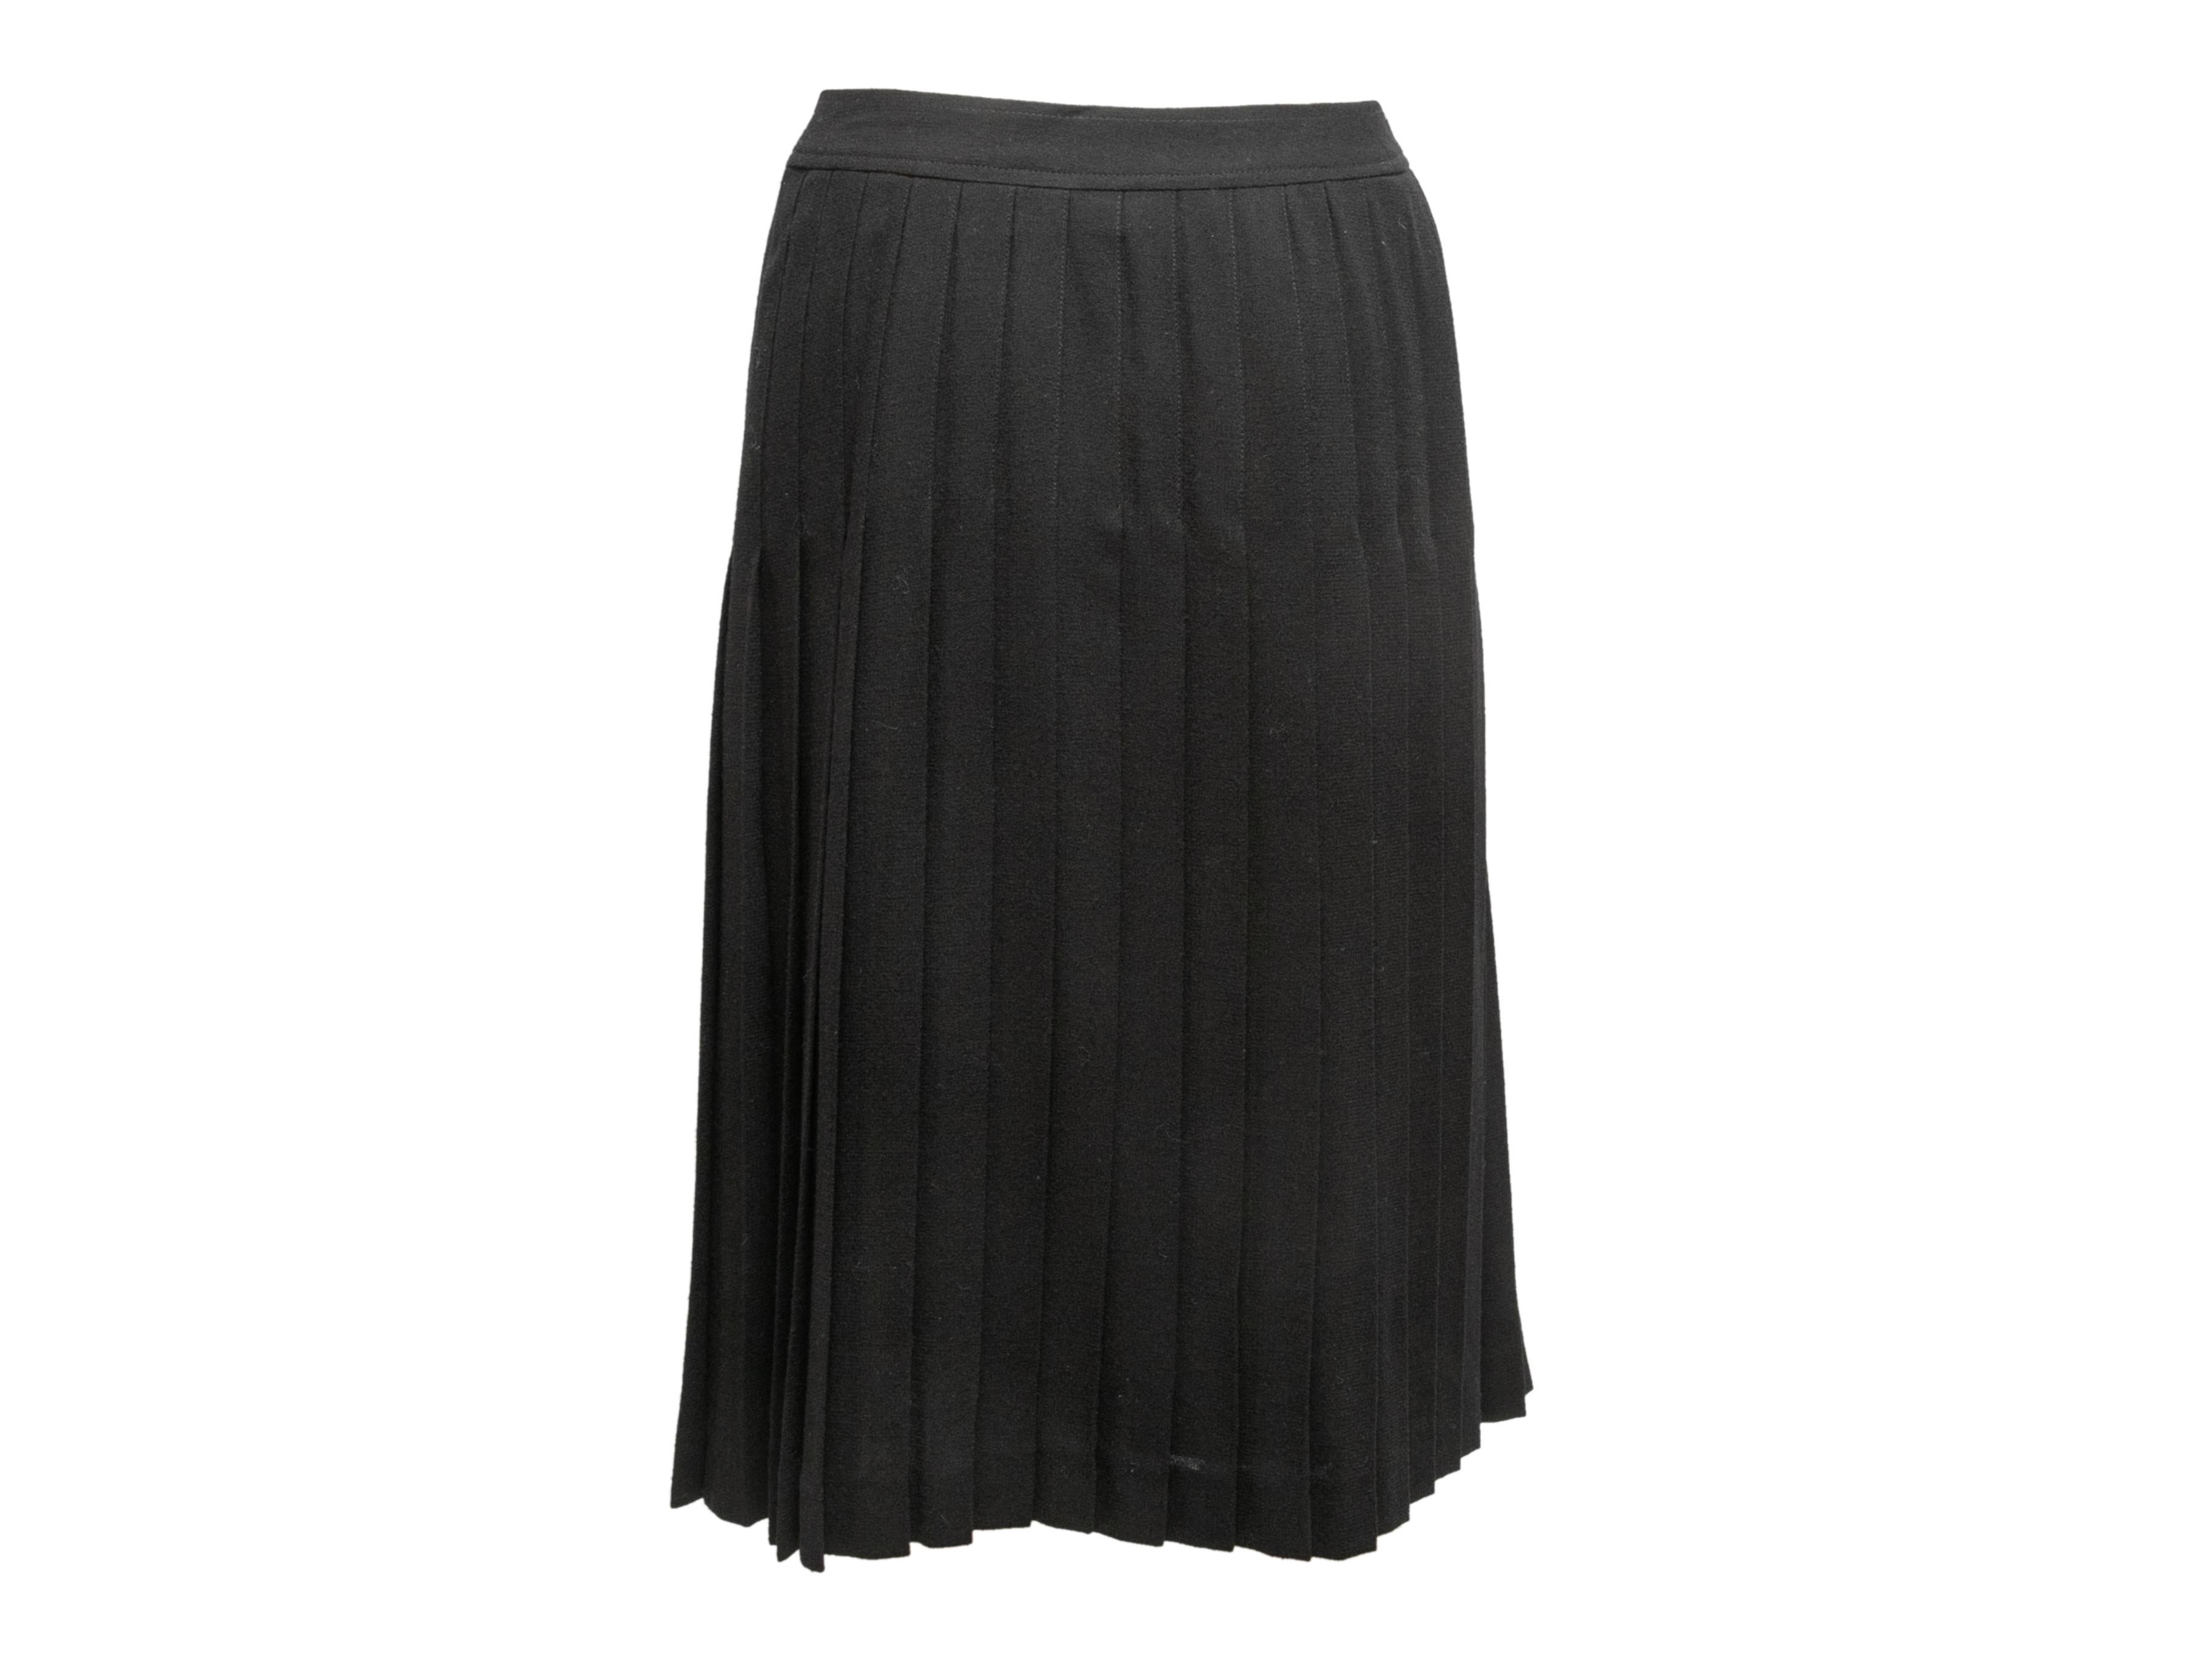 Vintage black wool pleated skirt by Celine. Button closures at side. Designer size 42. 29